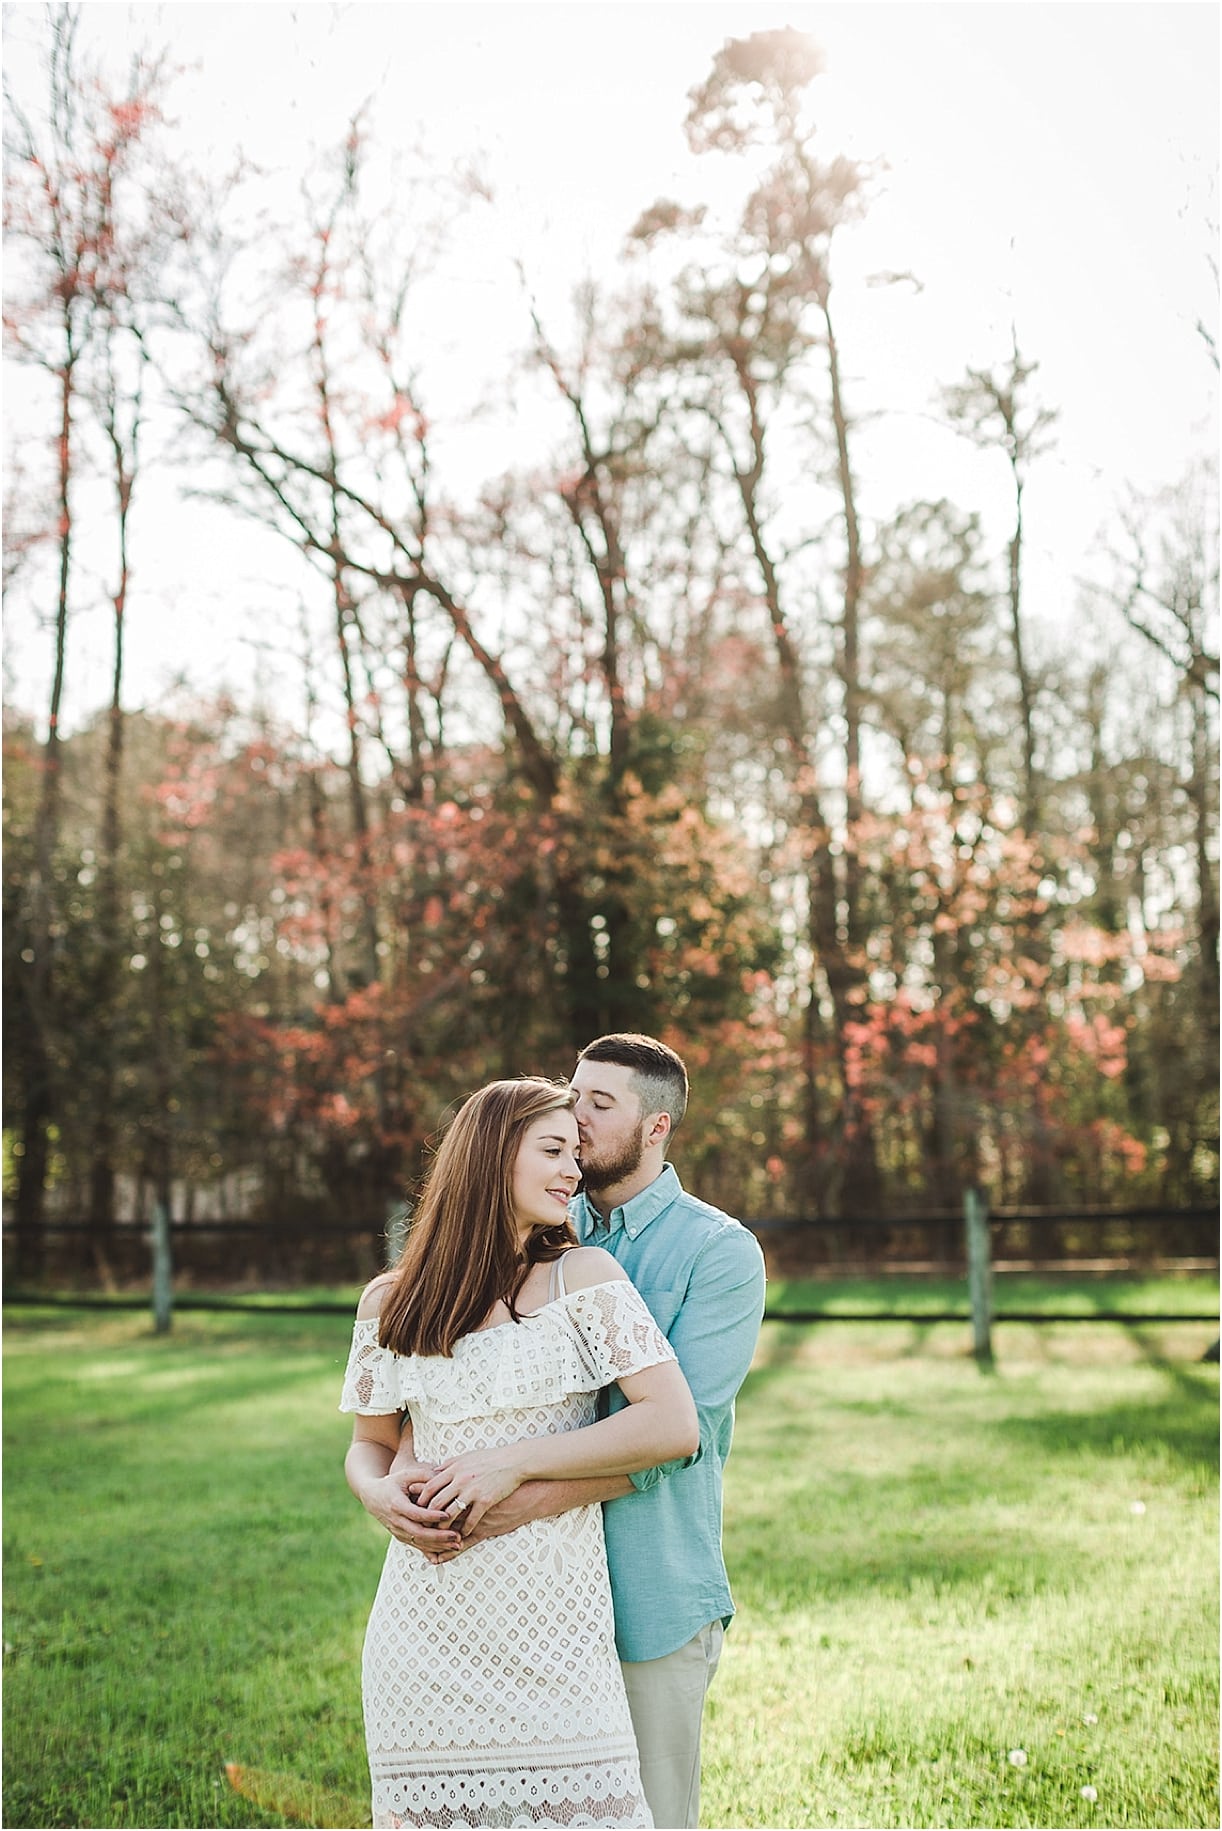 Rustic Farm Engagement Sesison in Suffolk Virginia | Hill City Bride Wedding Blog